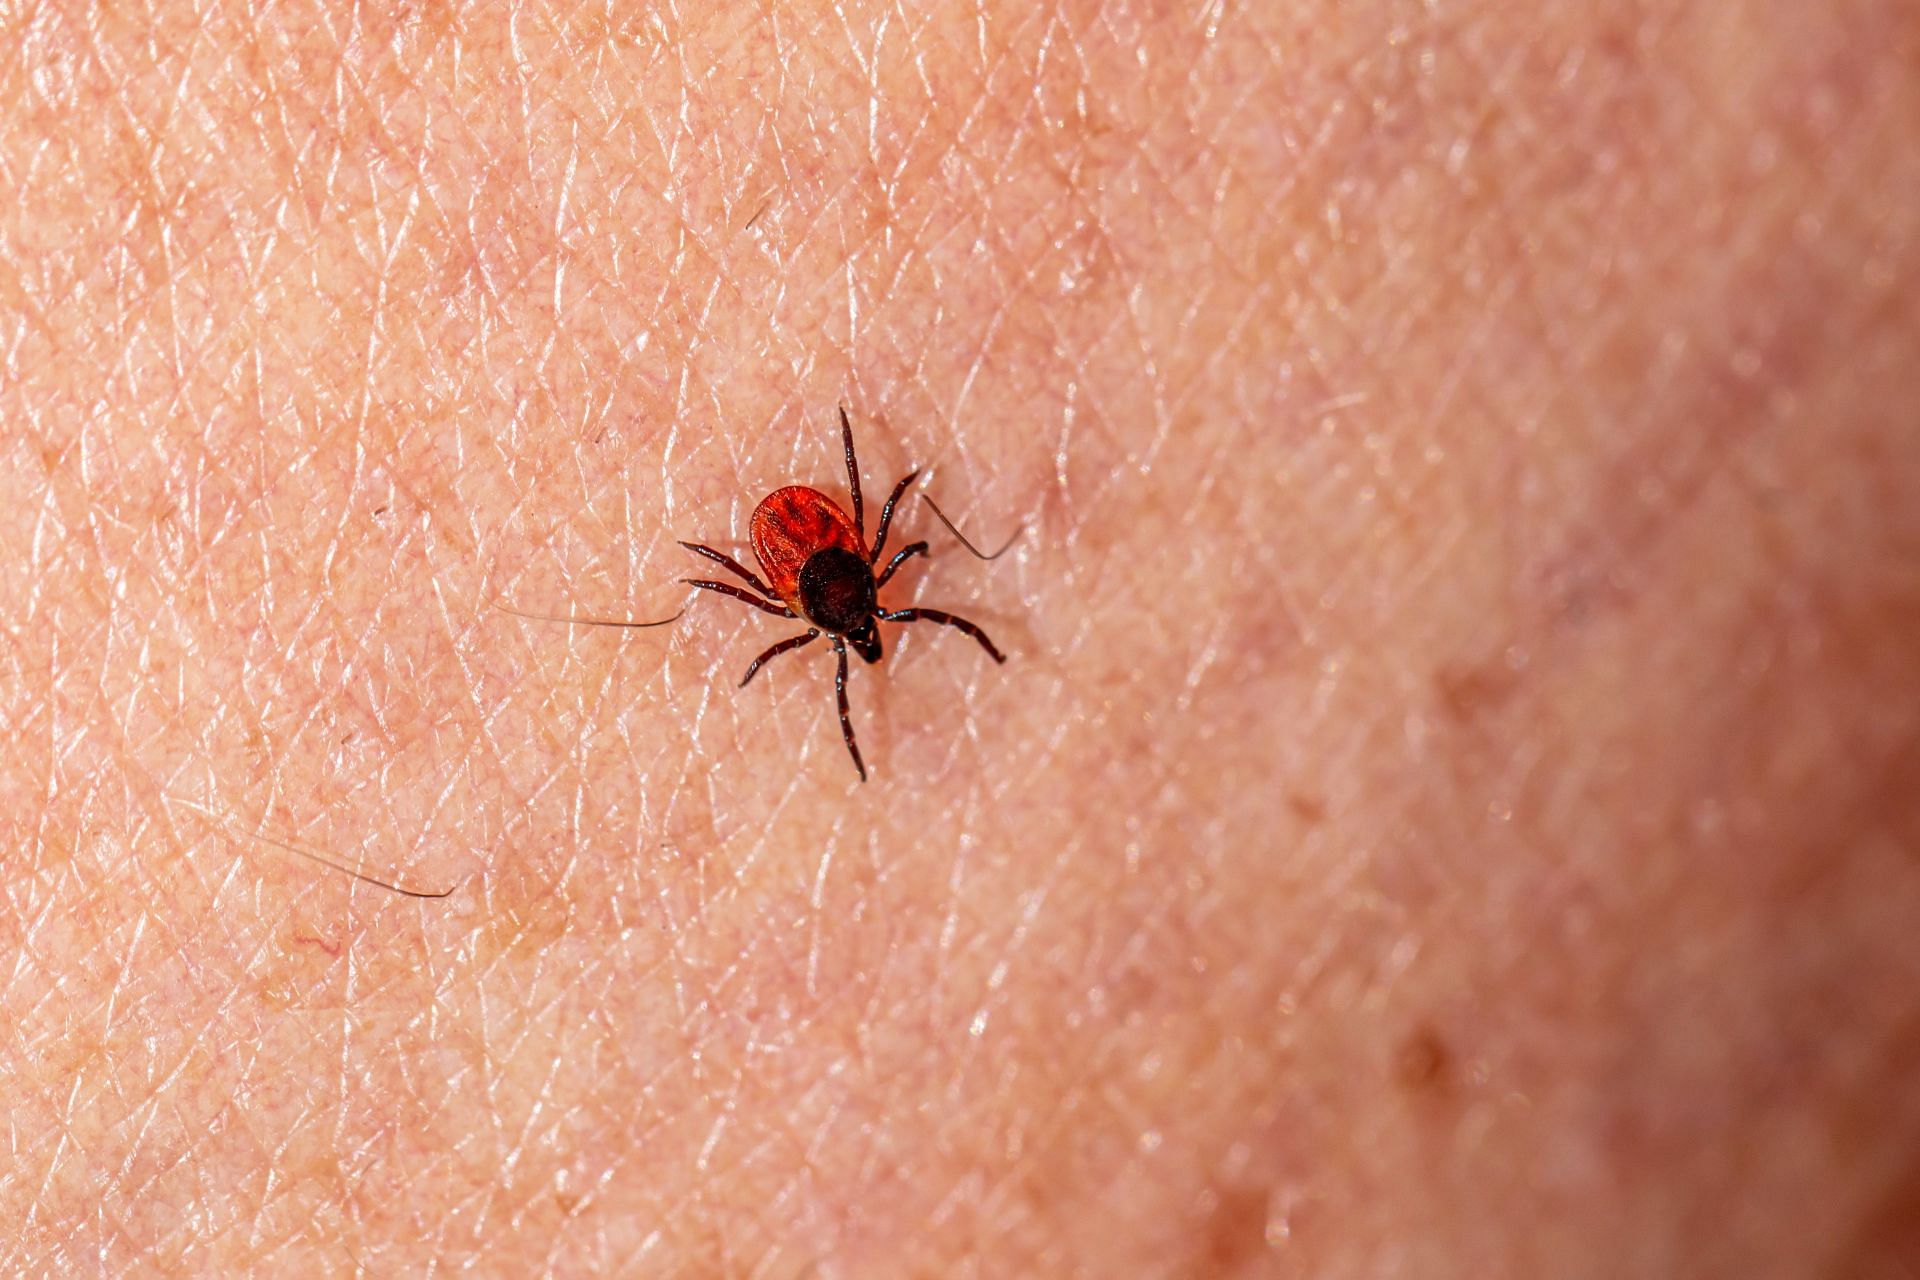 Spider bites can inject venom into the skin. (Image via Pexels/Erik Karits)